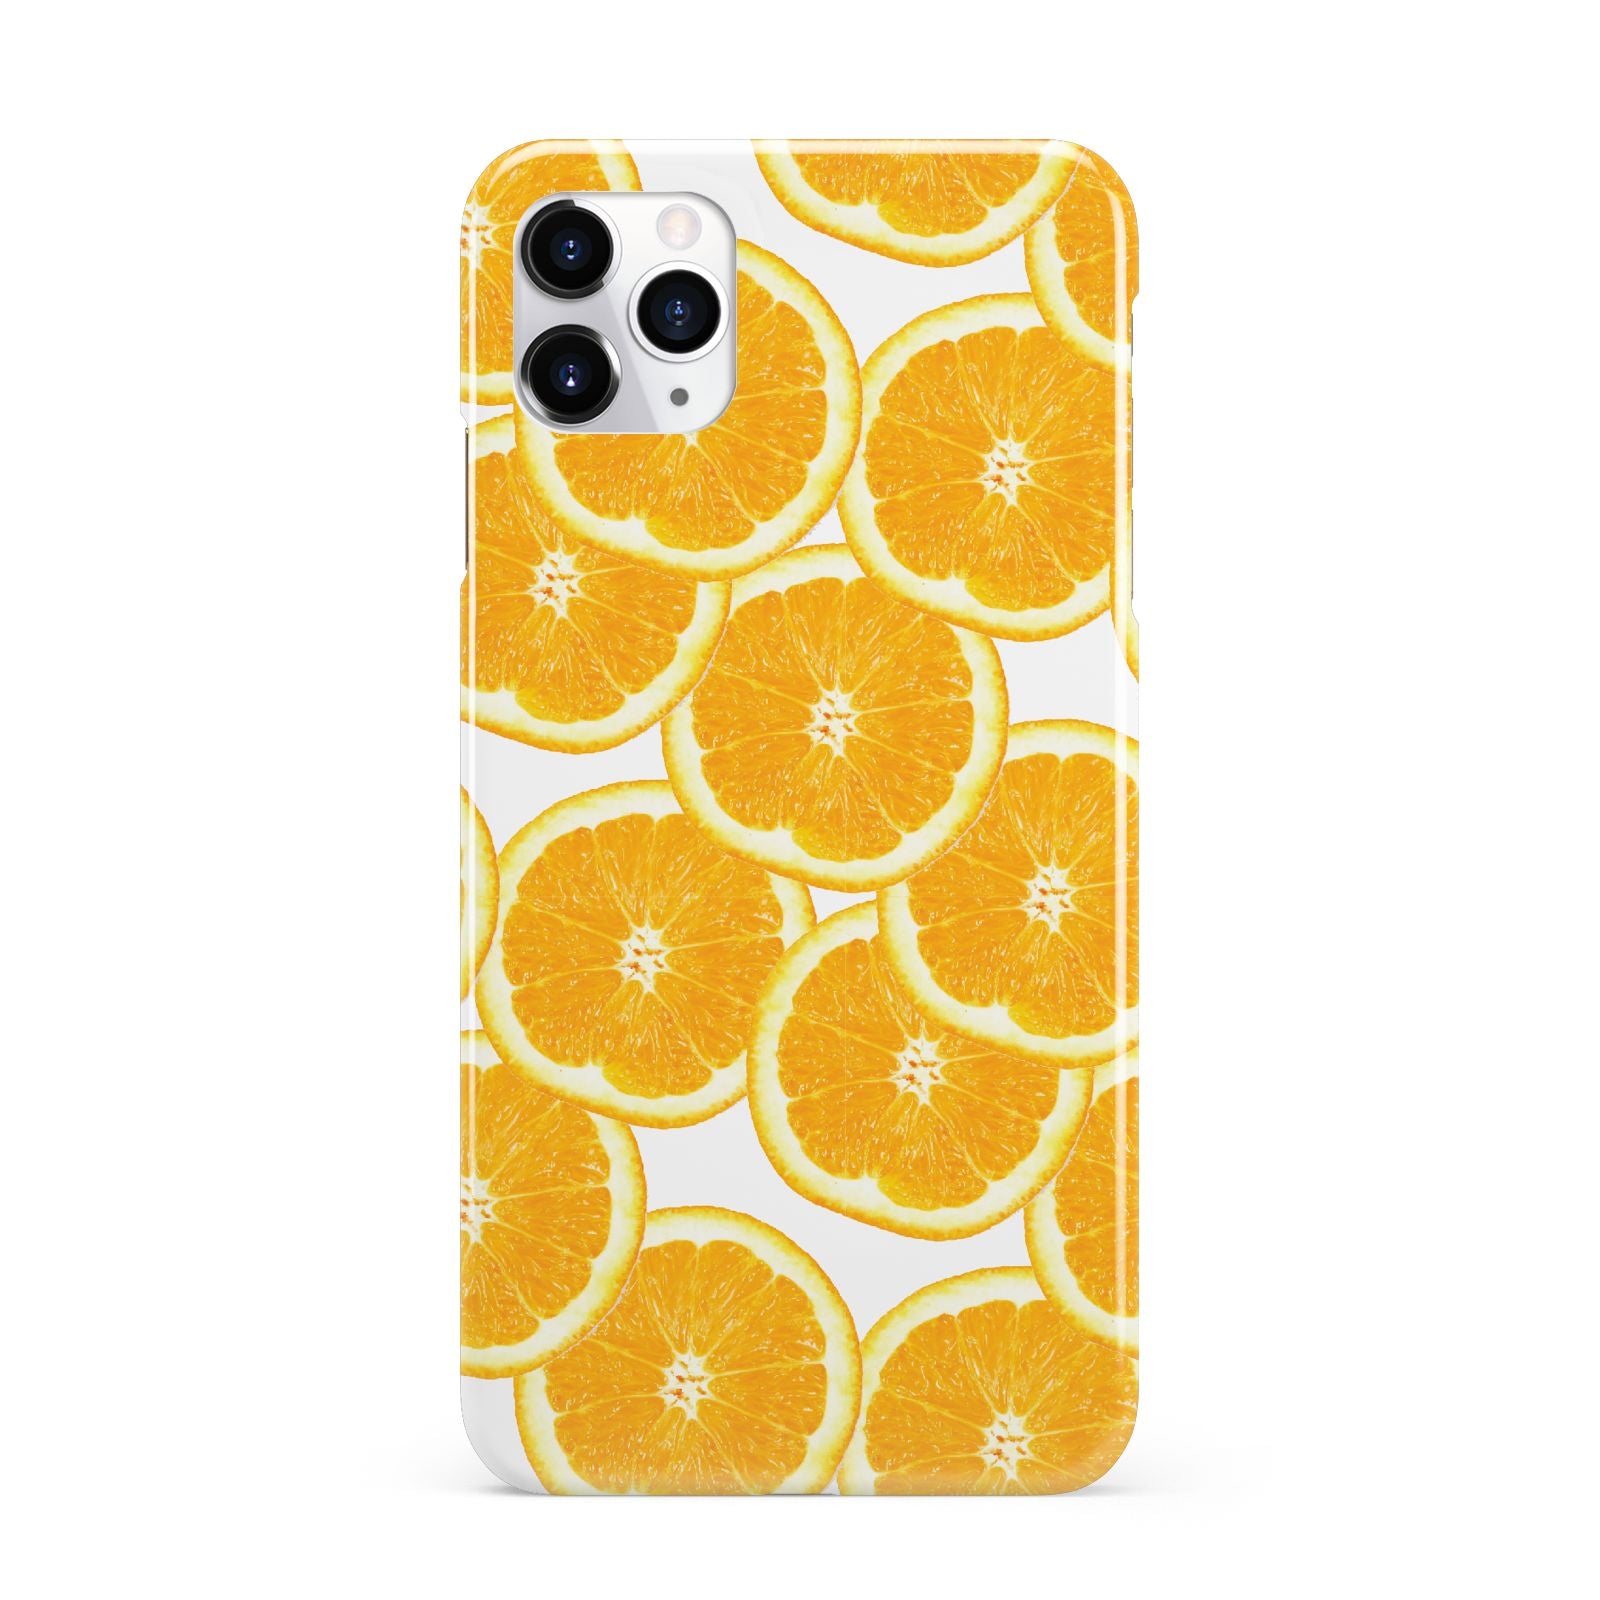 Orange Fruit Slices iPhone 11 Pro Max 3D Snap Case